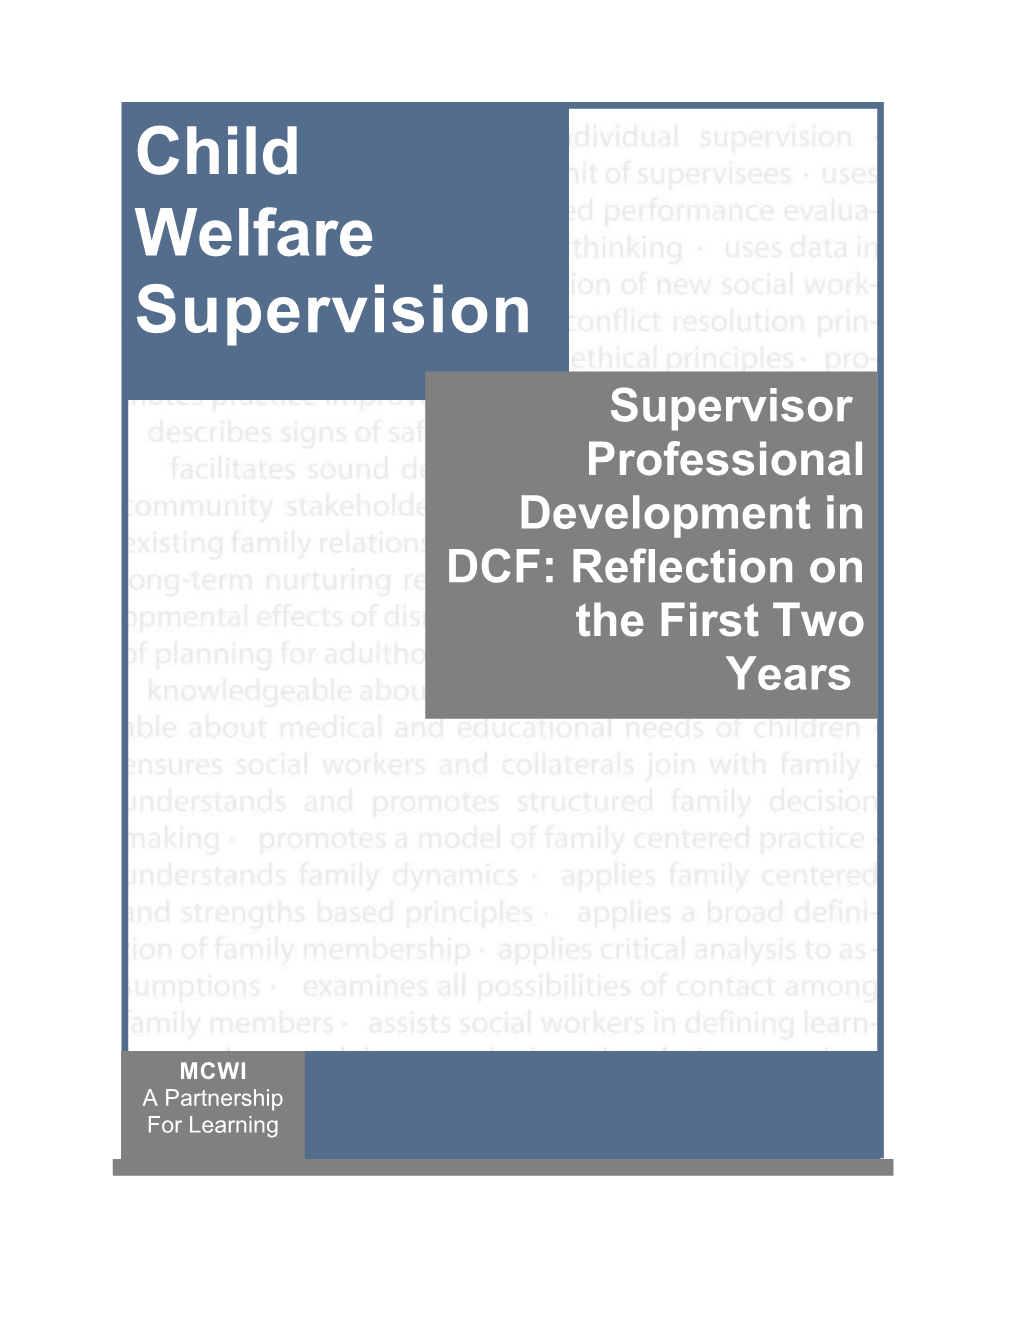 Supervisor Professional Development Program